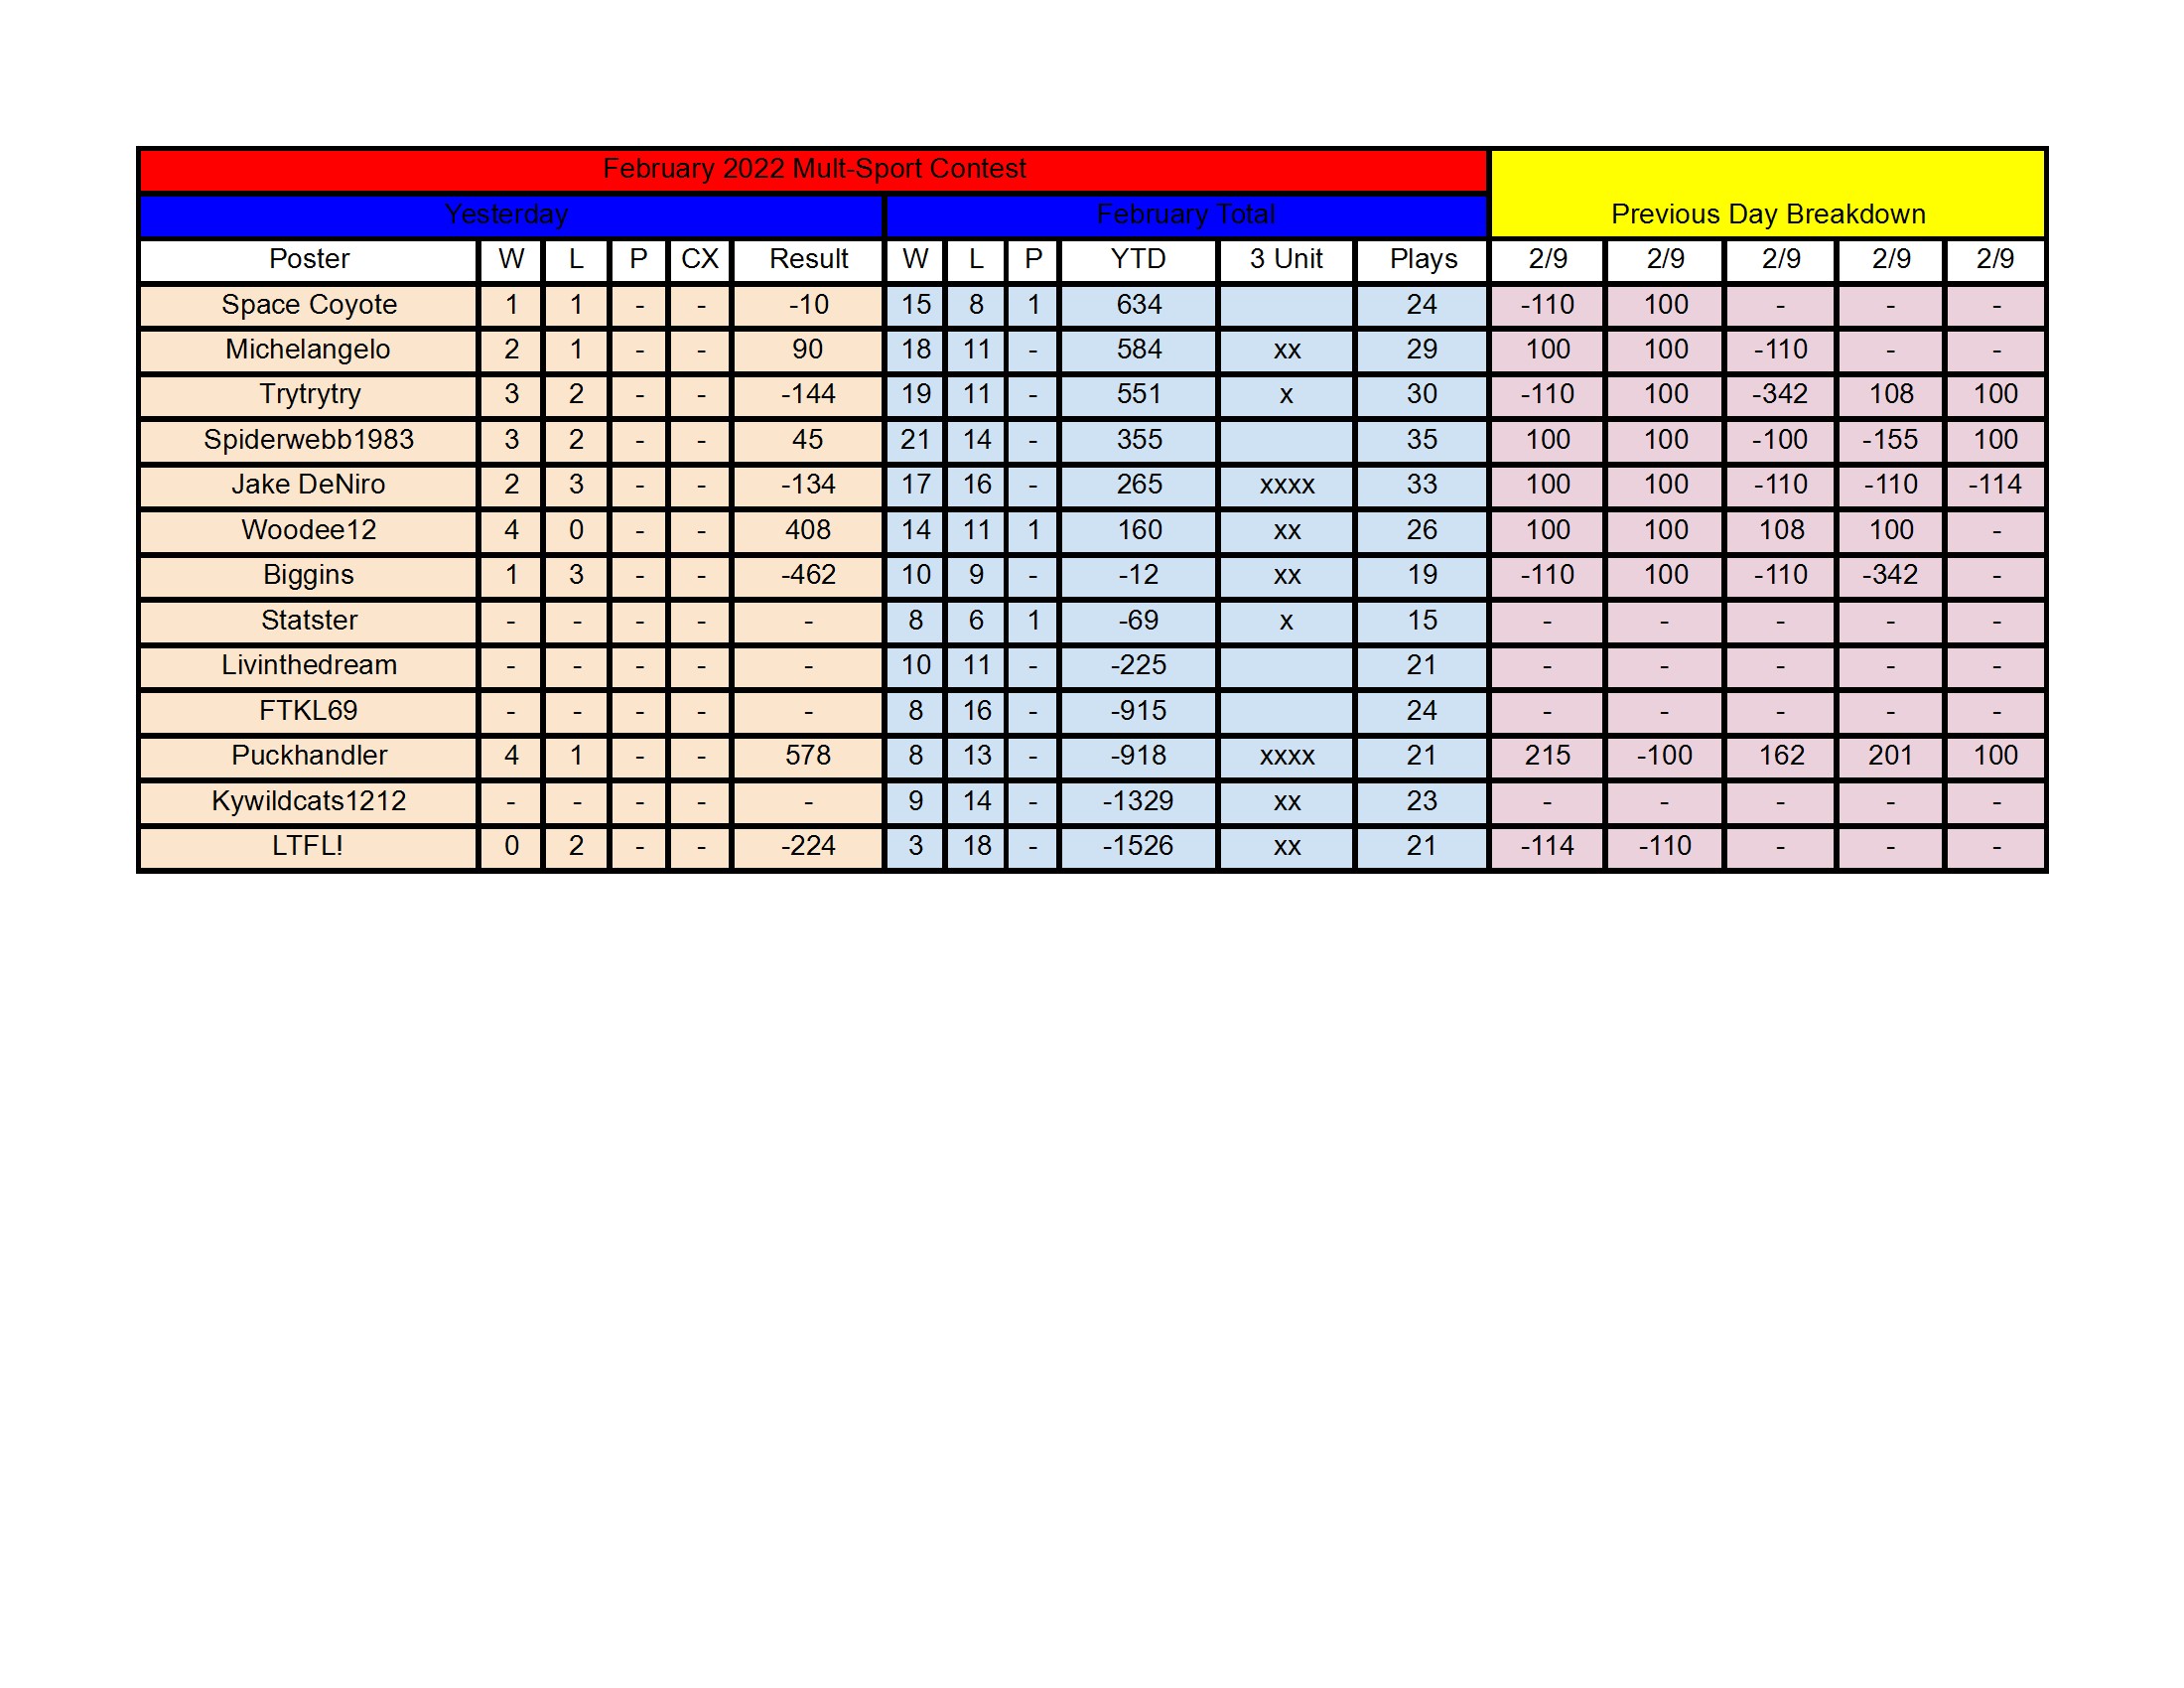 February Standings - 2_9 conv 1.jpeg